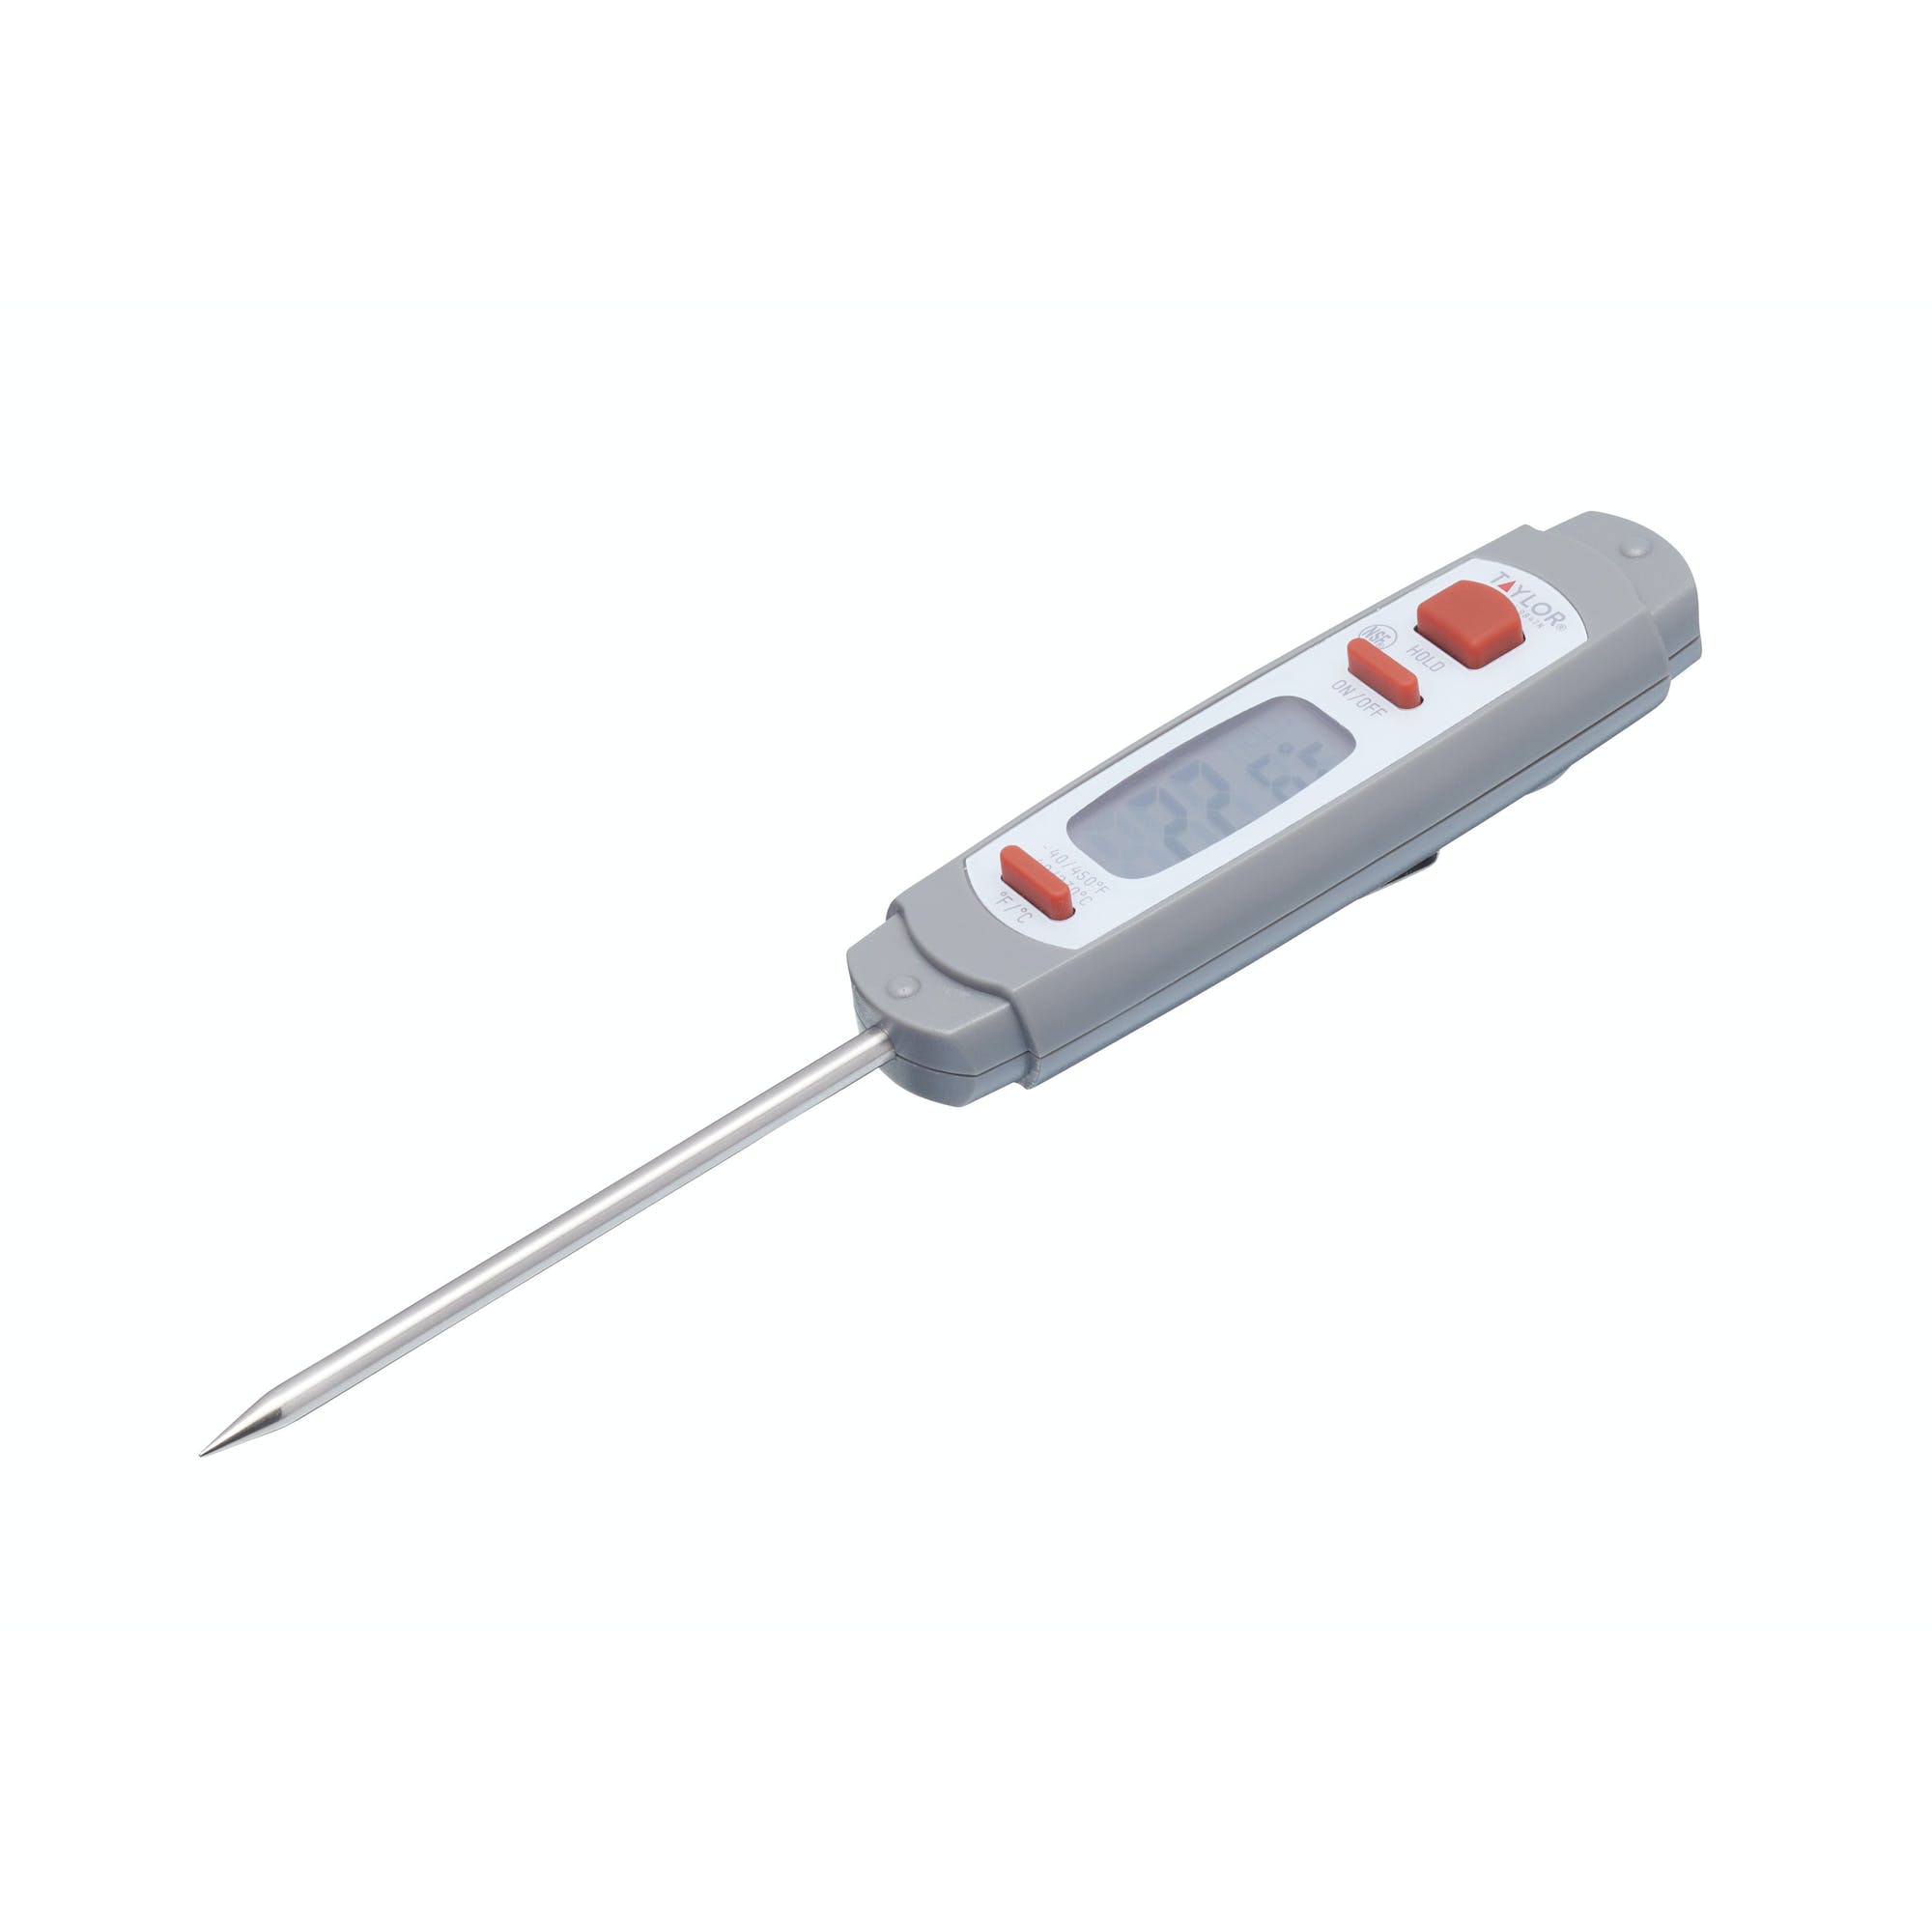 Taylor Pro Digital Rapid Response Digital Probe Thermometer - The Cooks Cupboard Ltd